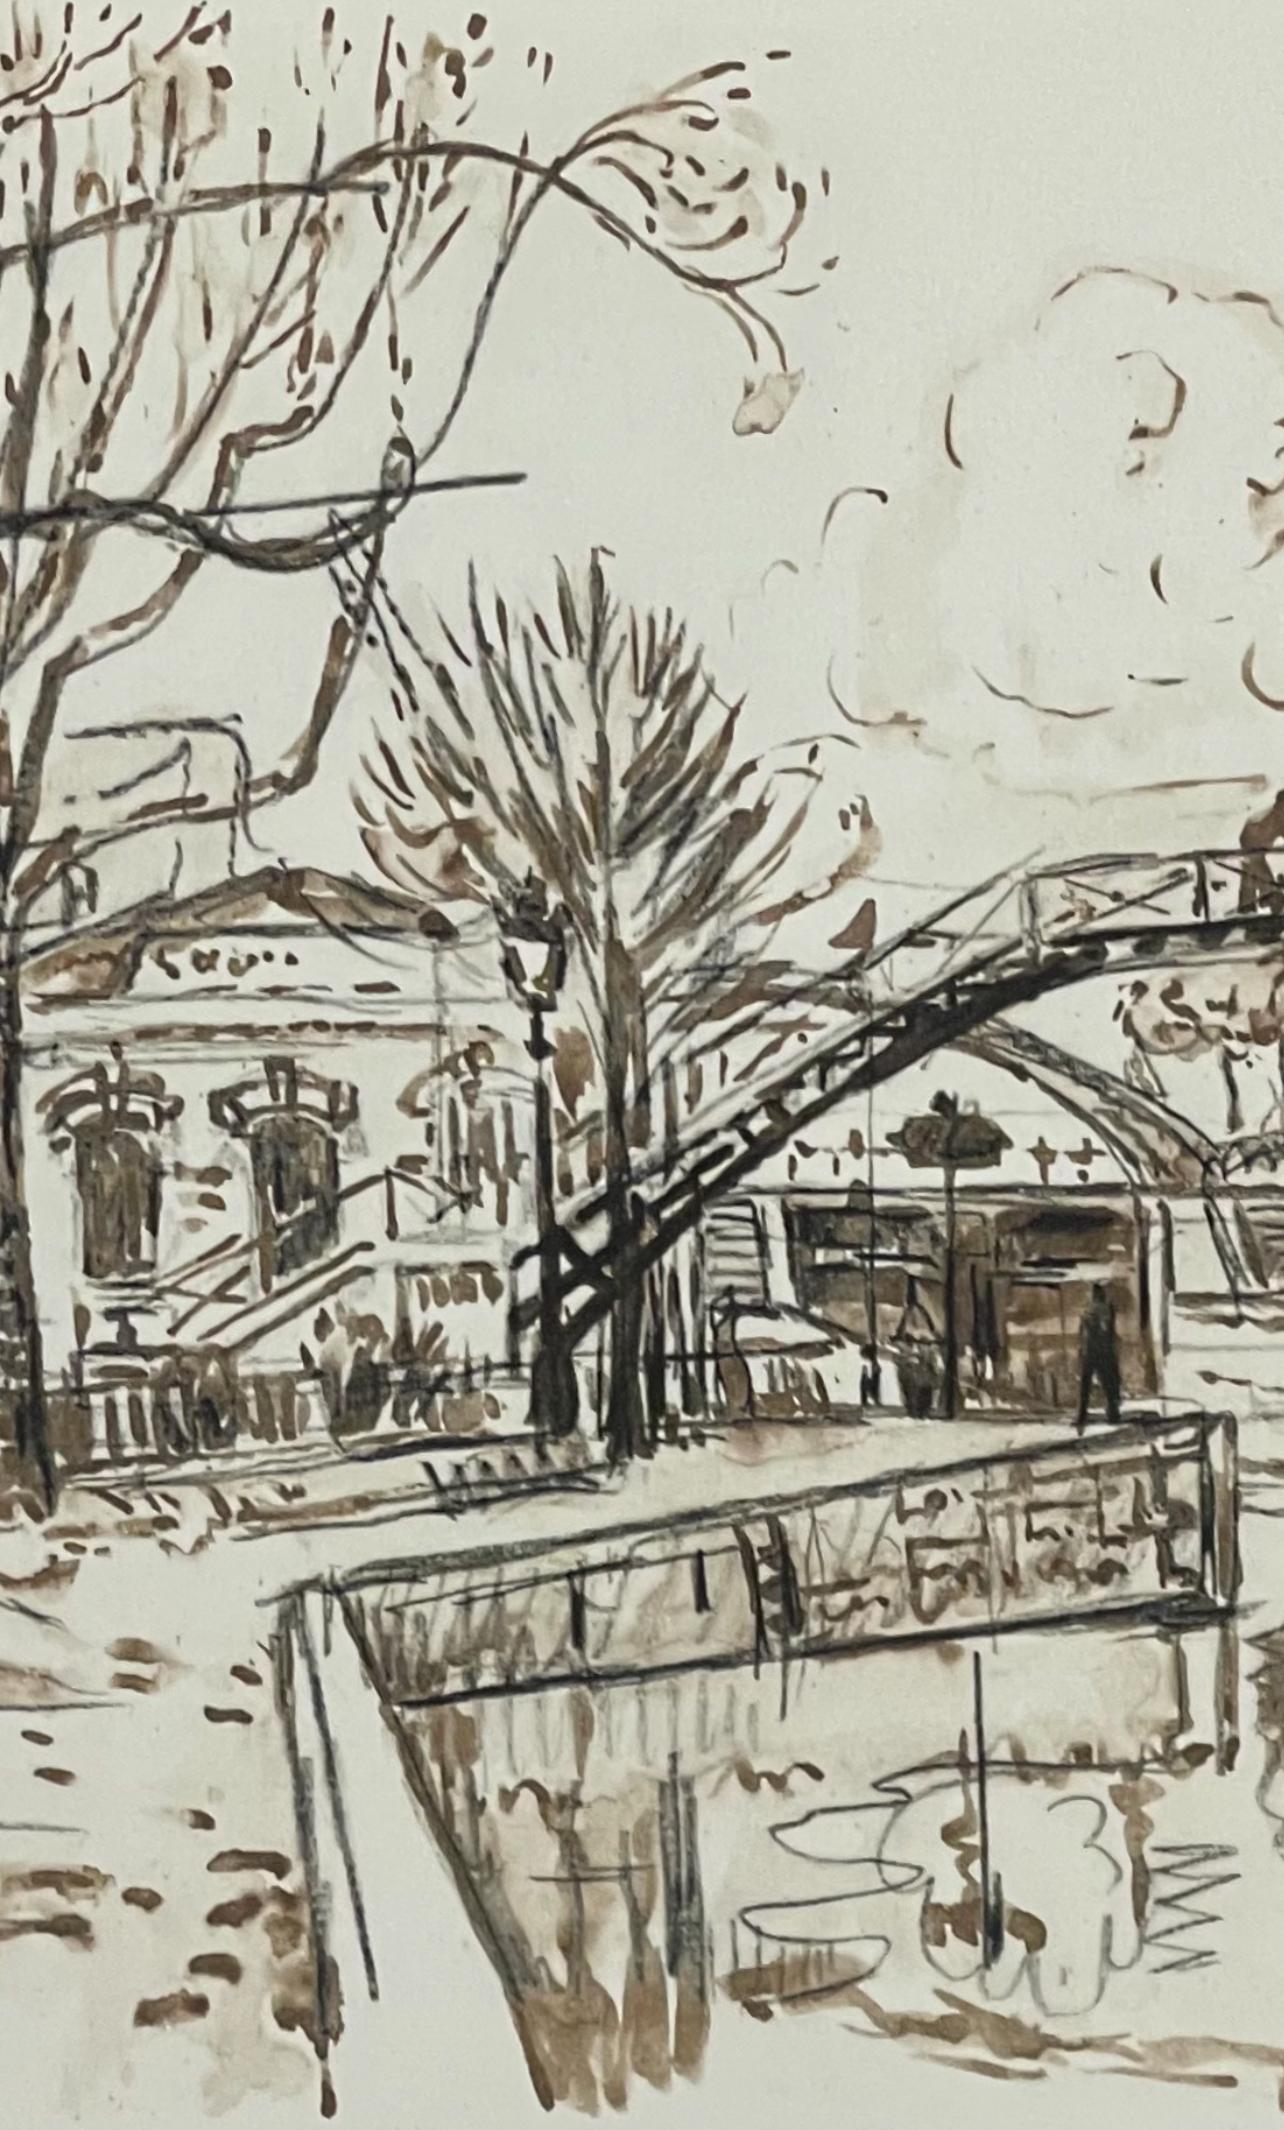 Signac, L'Hôtel du Nord, Signac Dessins (after) - Impressionist Print by Paul Signac